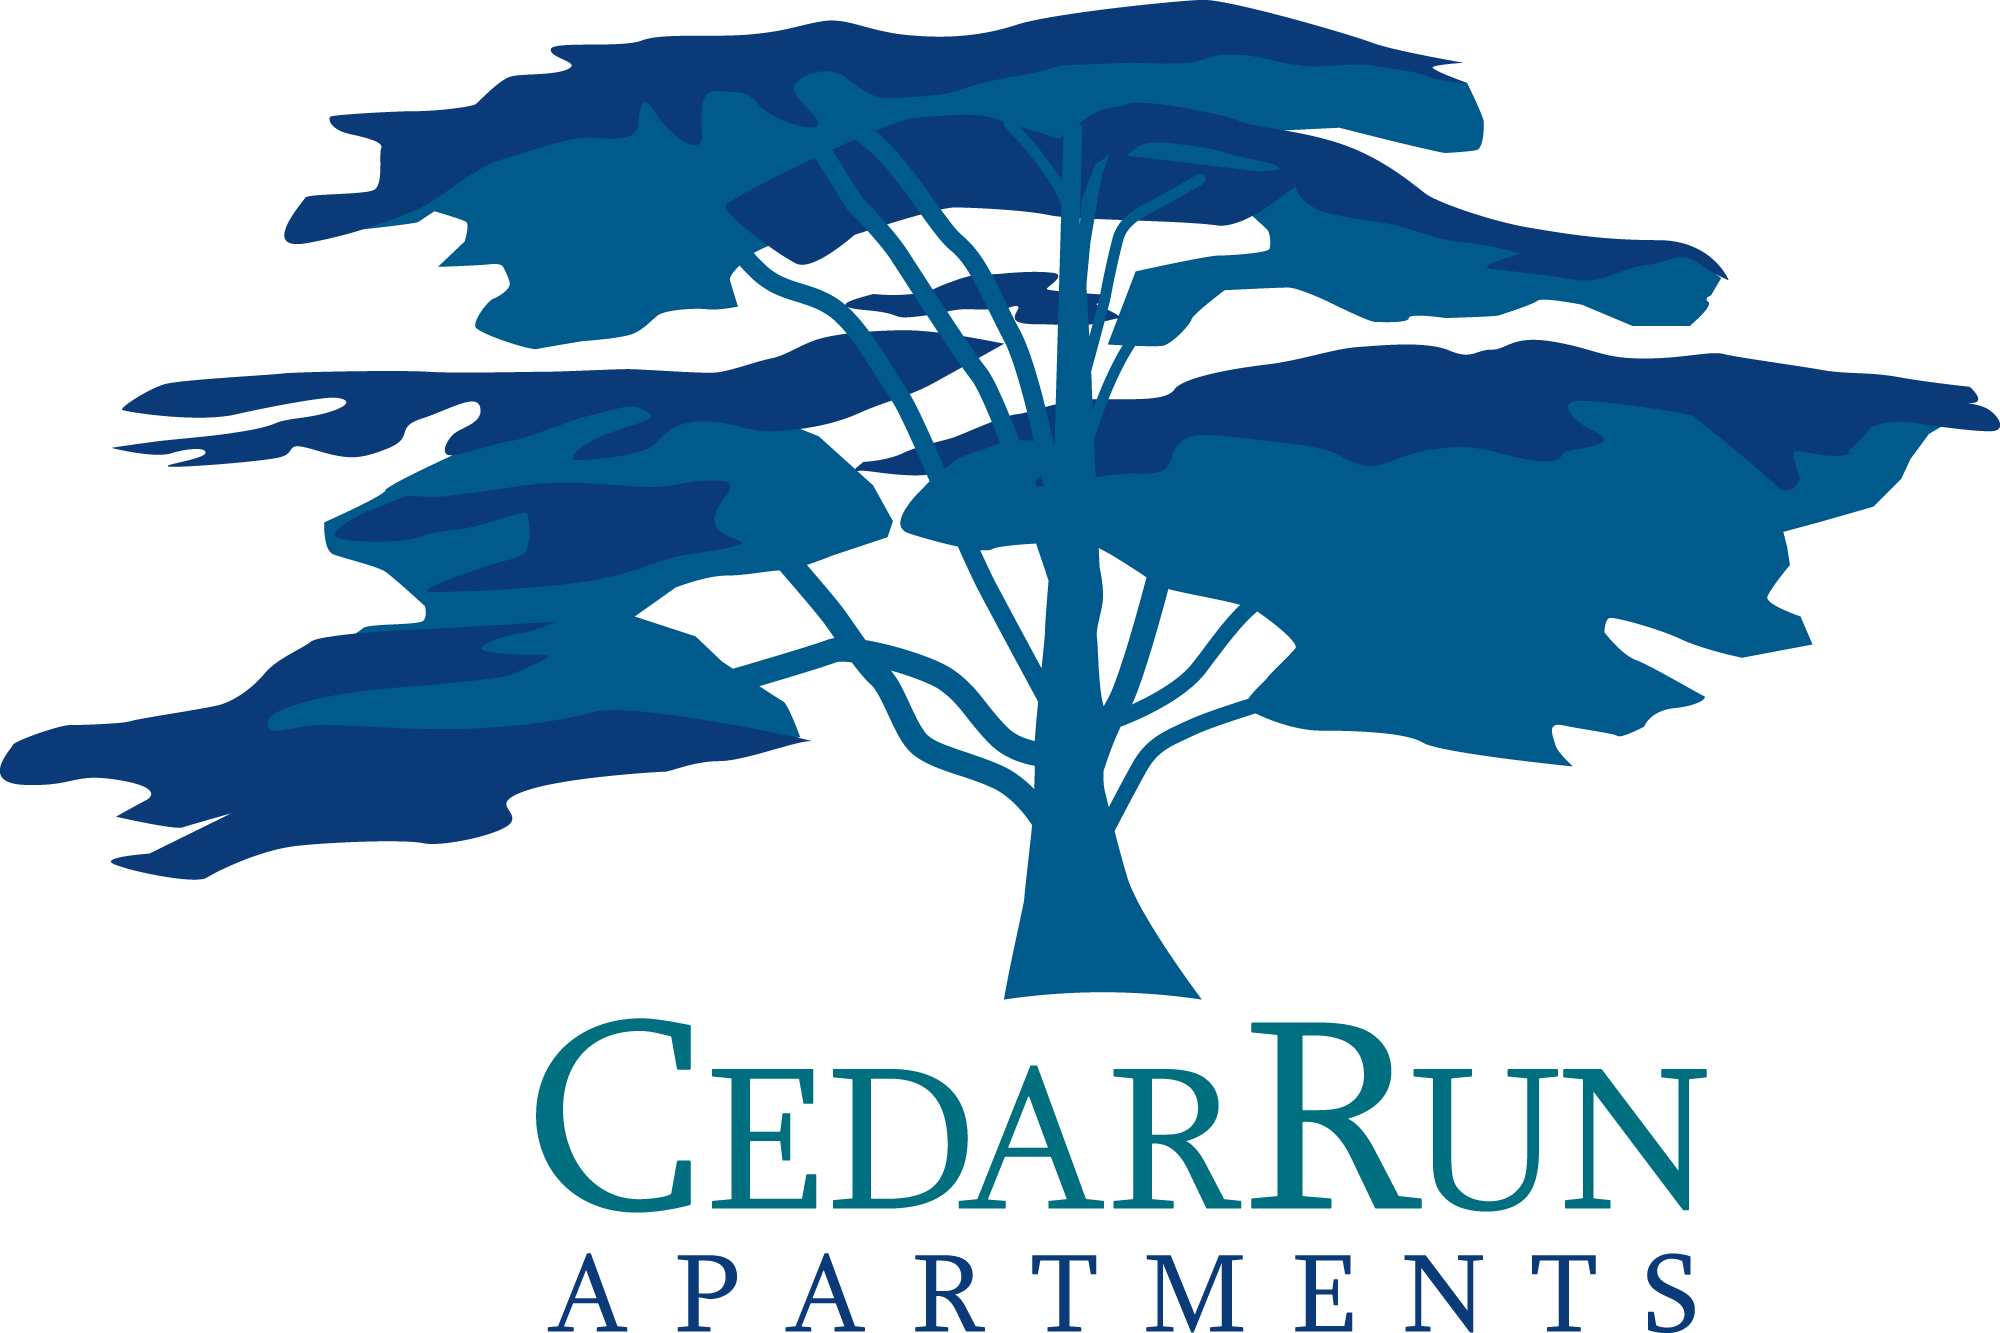 Our Property - Cedar Run Apartments (2000x1333)